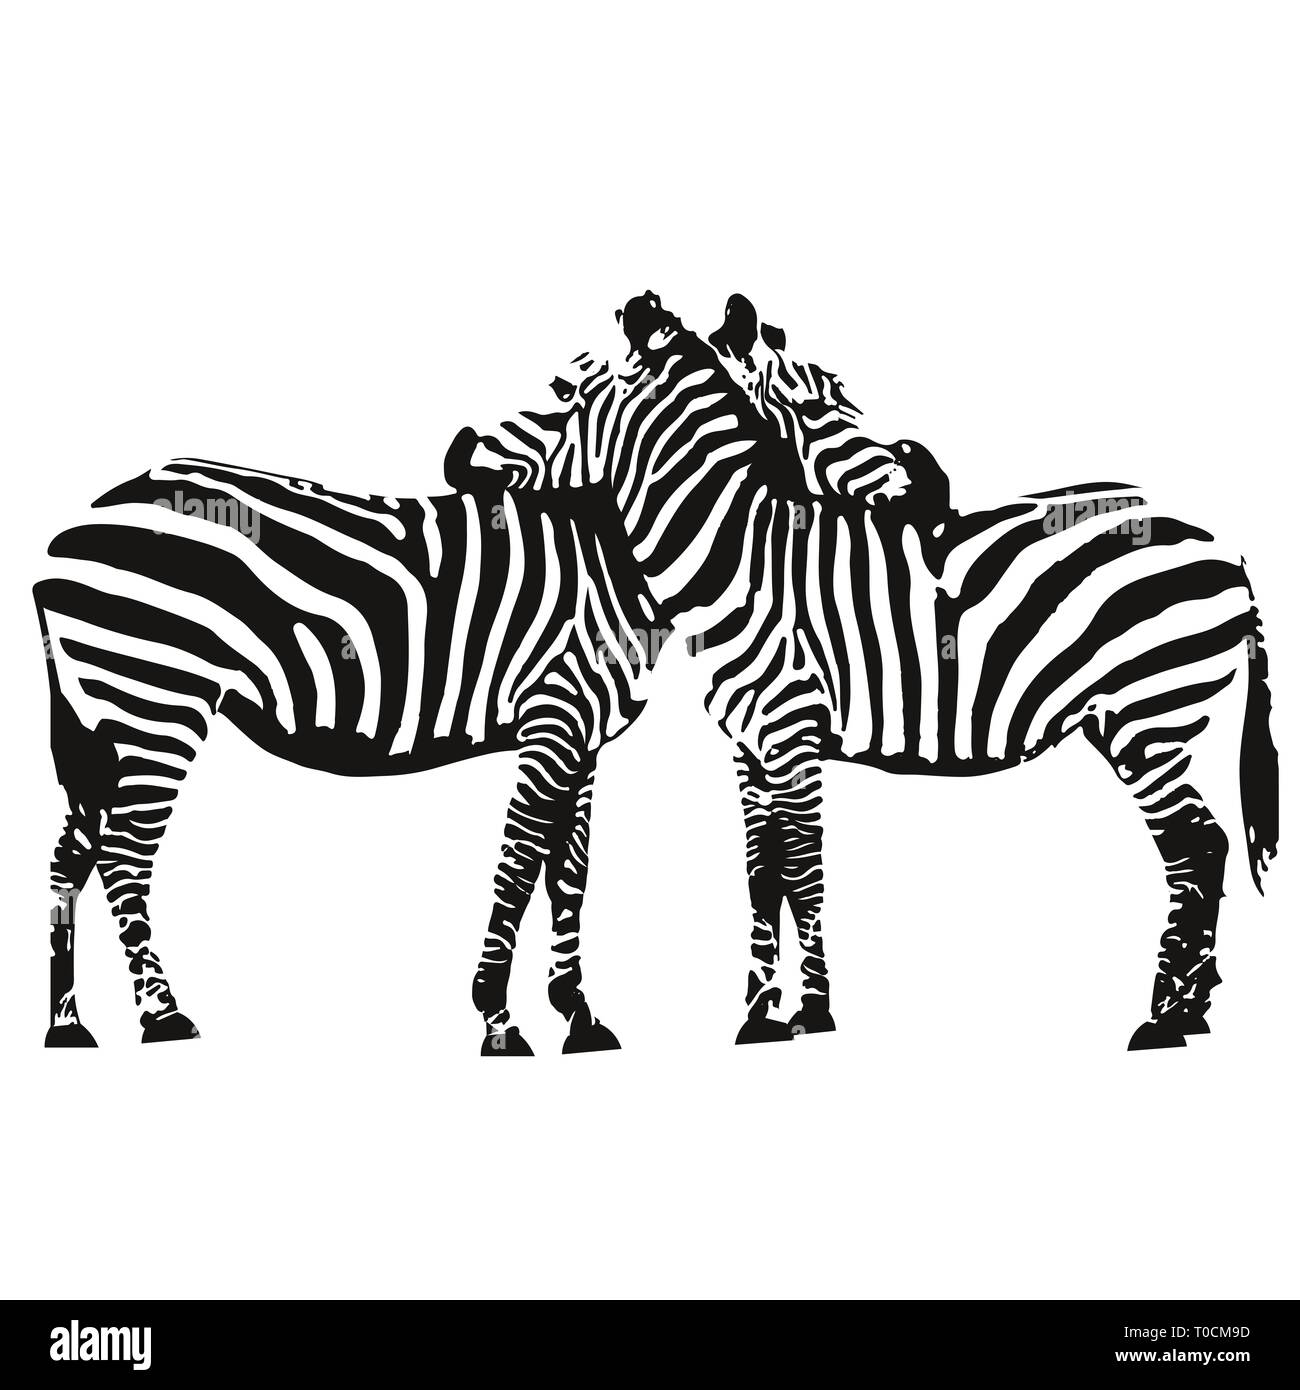 Illustration of two zebras hugging Stock Photo